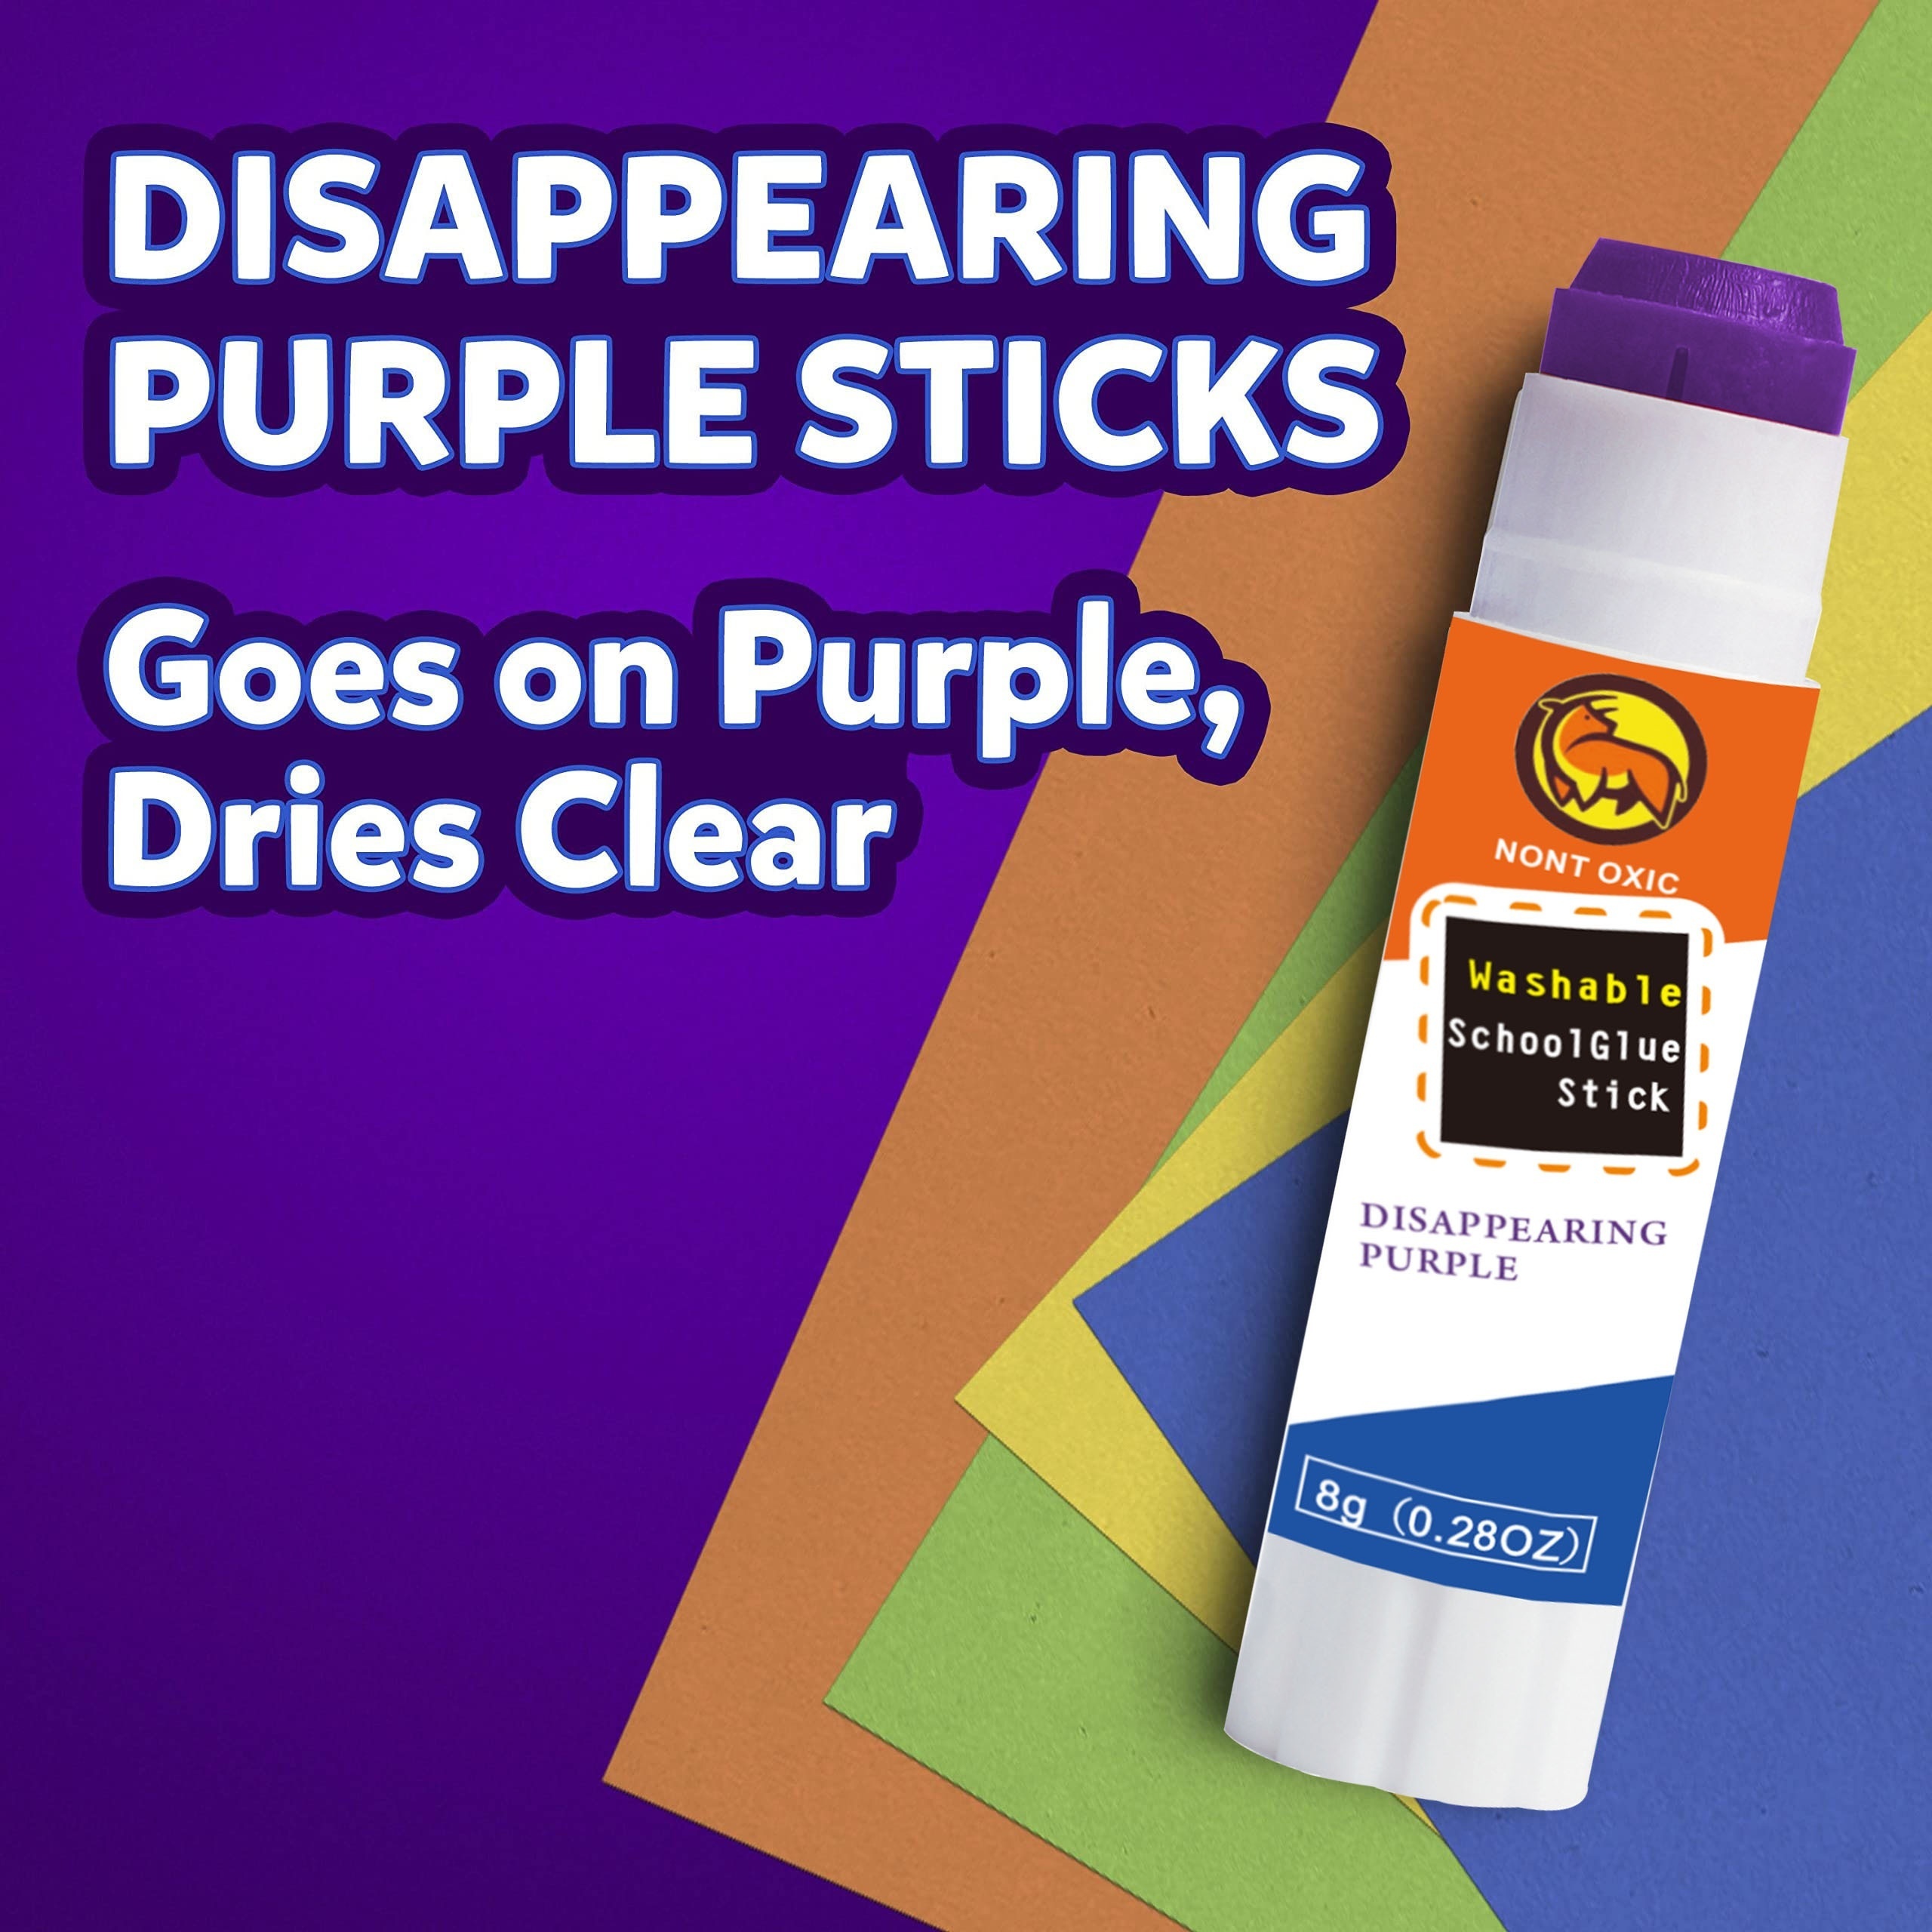 NEW Elmer's Spray Glue Adhesive, Disappearing Purple - 1 Fl Oz